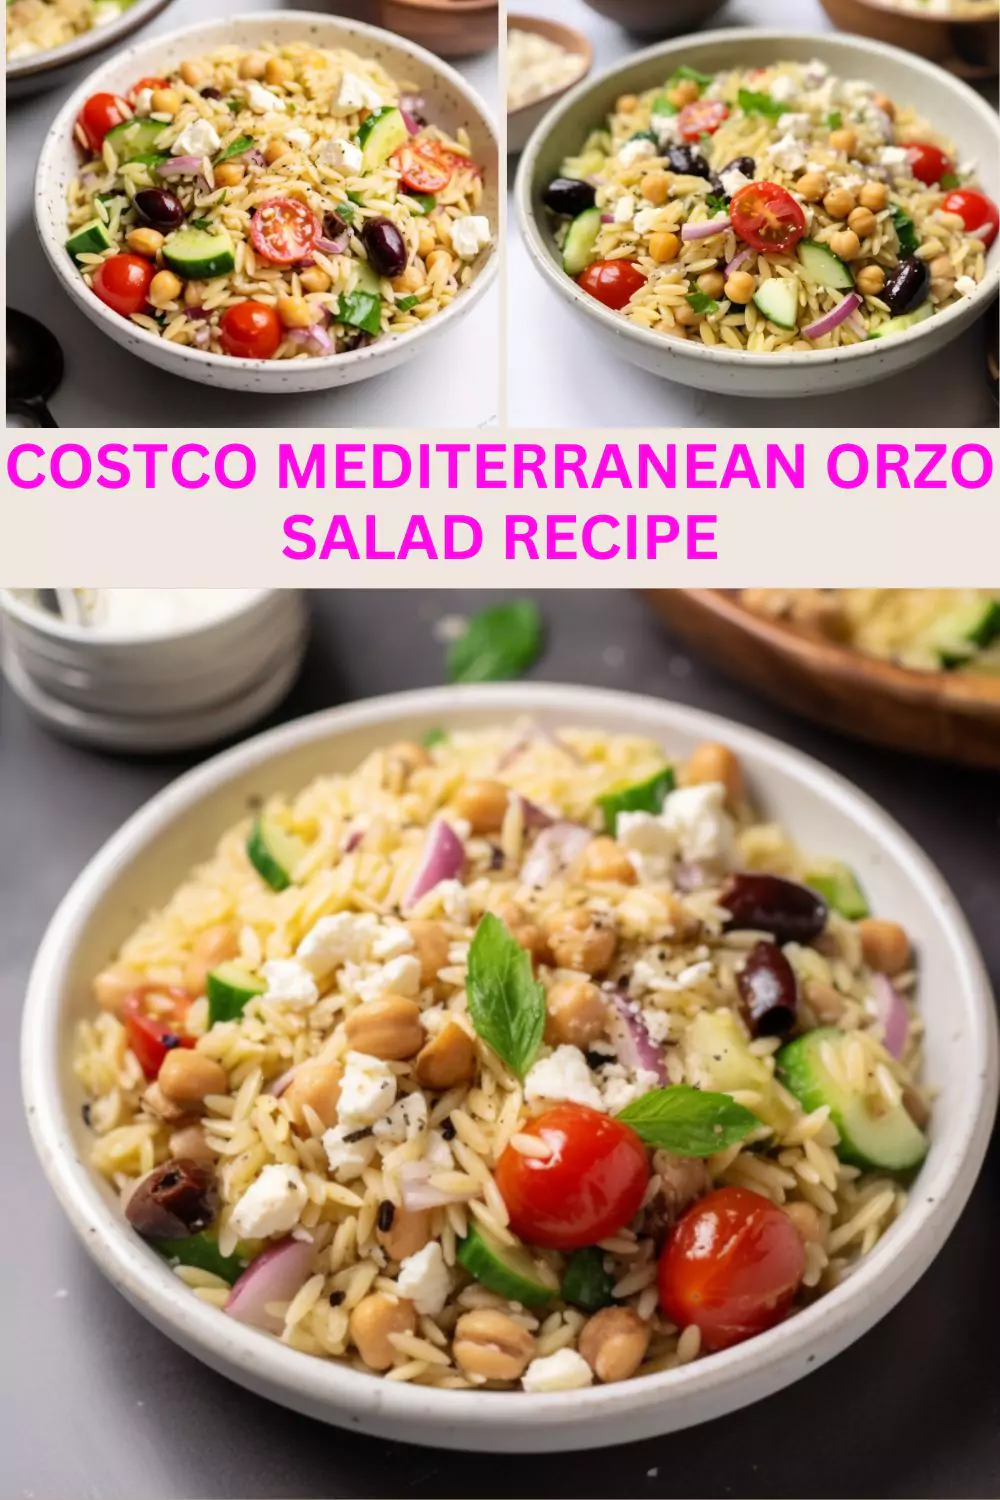 Costco Mediterranean Orzo Salad Recipe